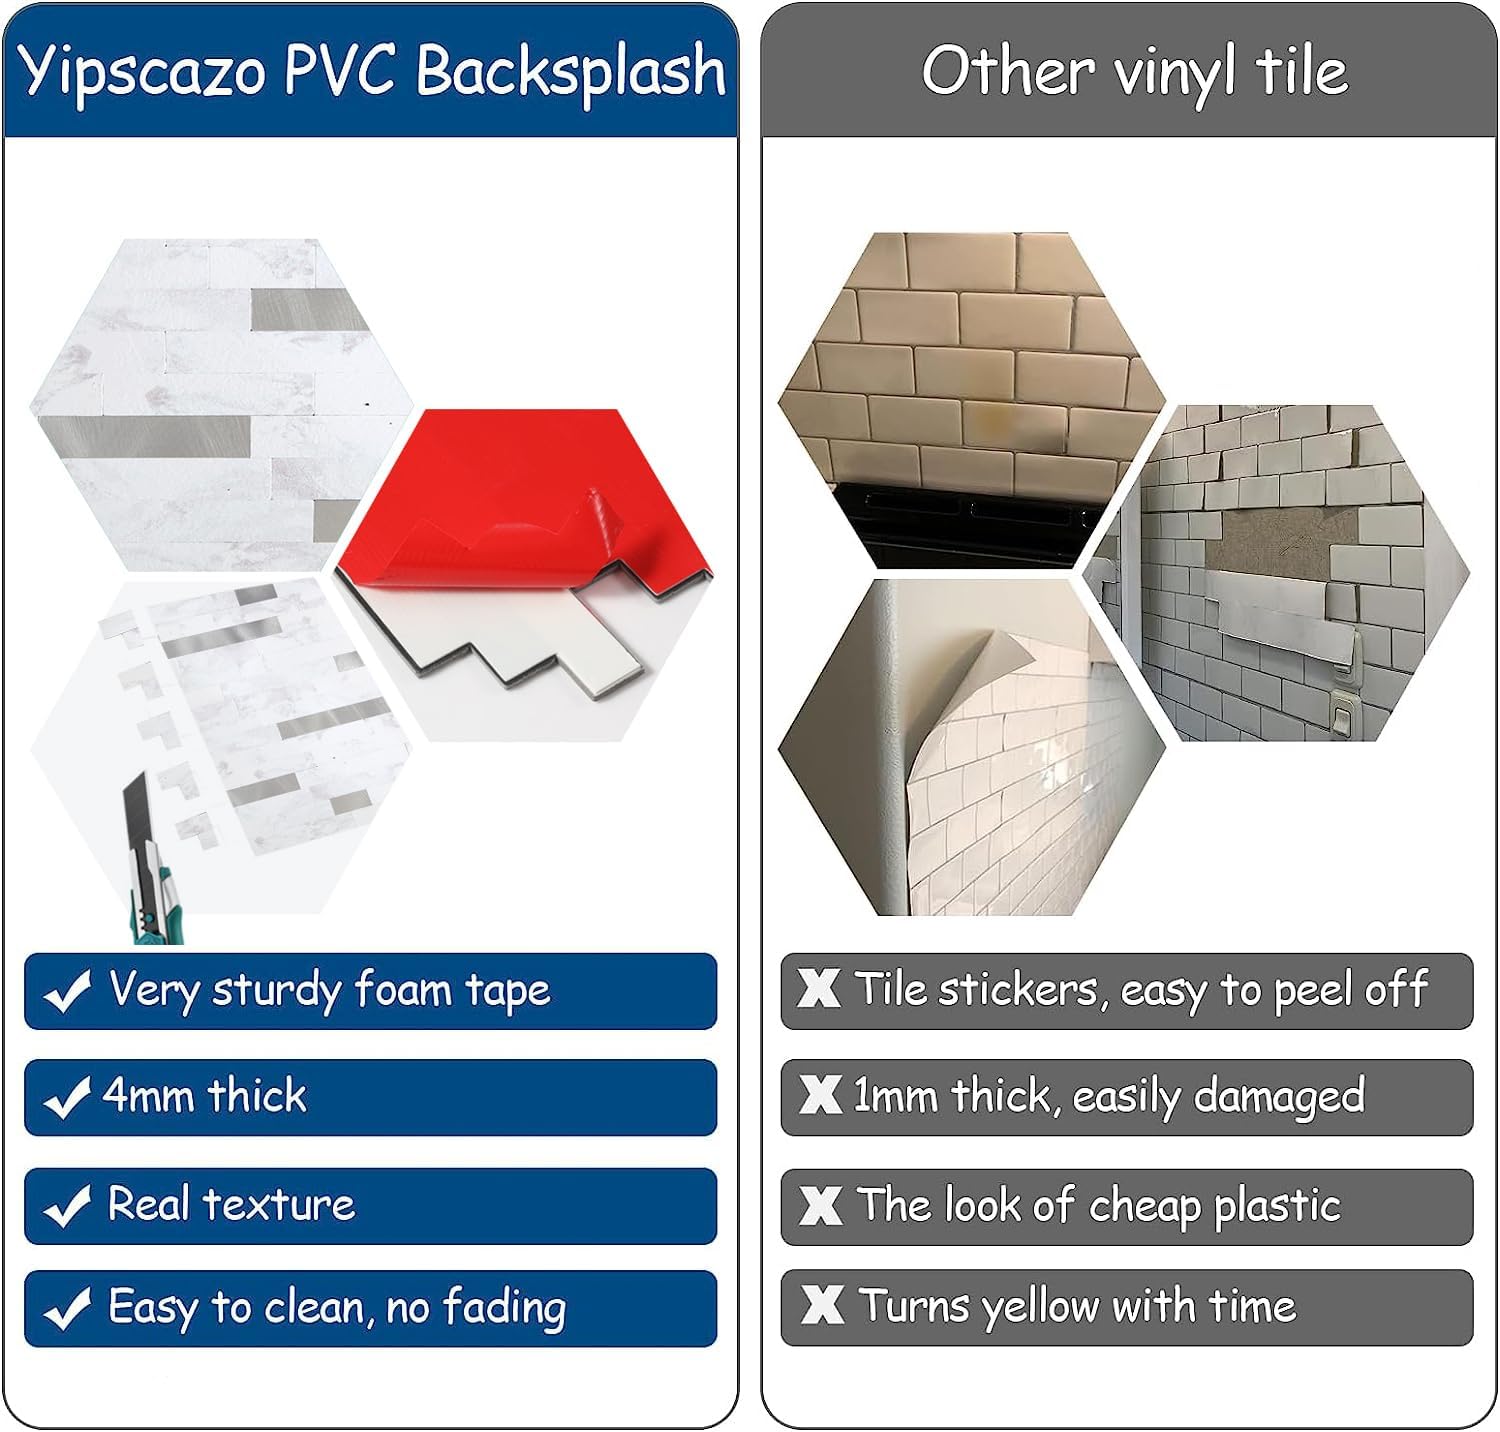 PVC backsplash ideas for kitchen Linear Blend in Kara White Stone